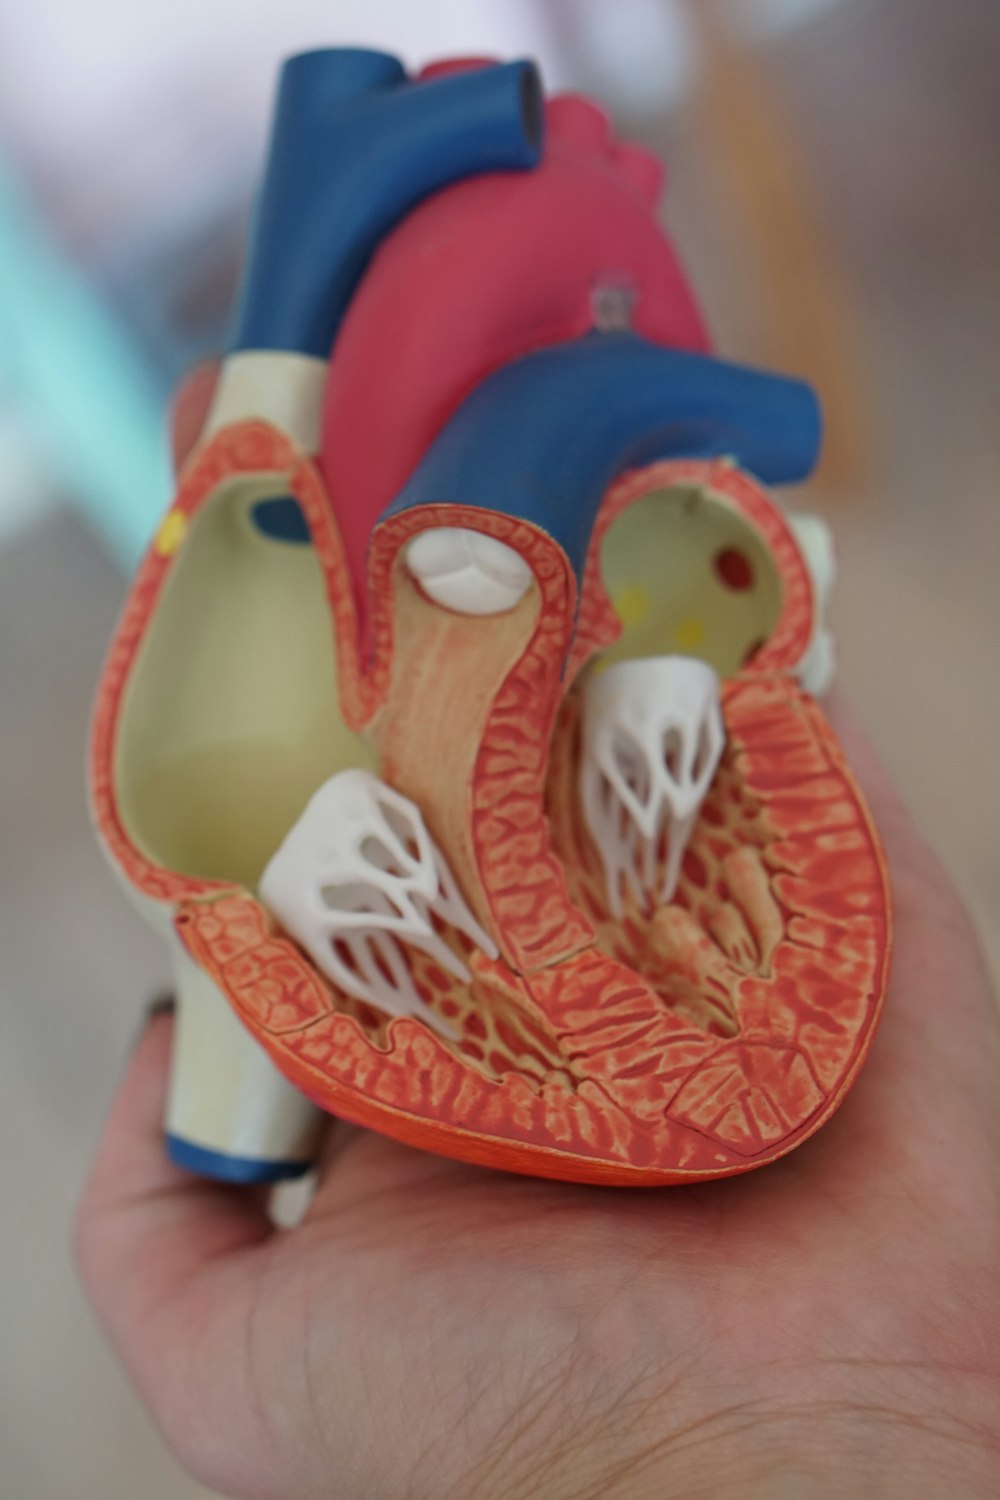 human heart anatomy learning tool